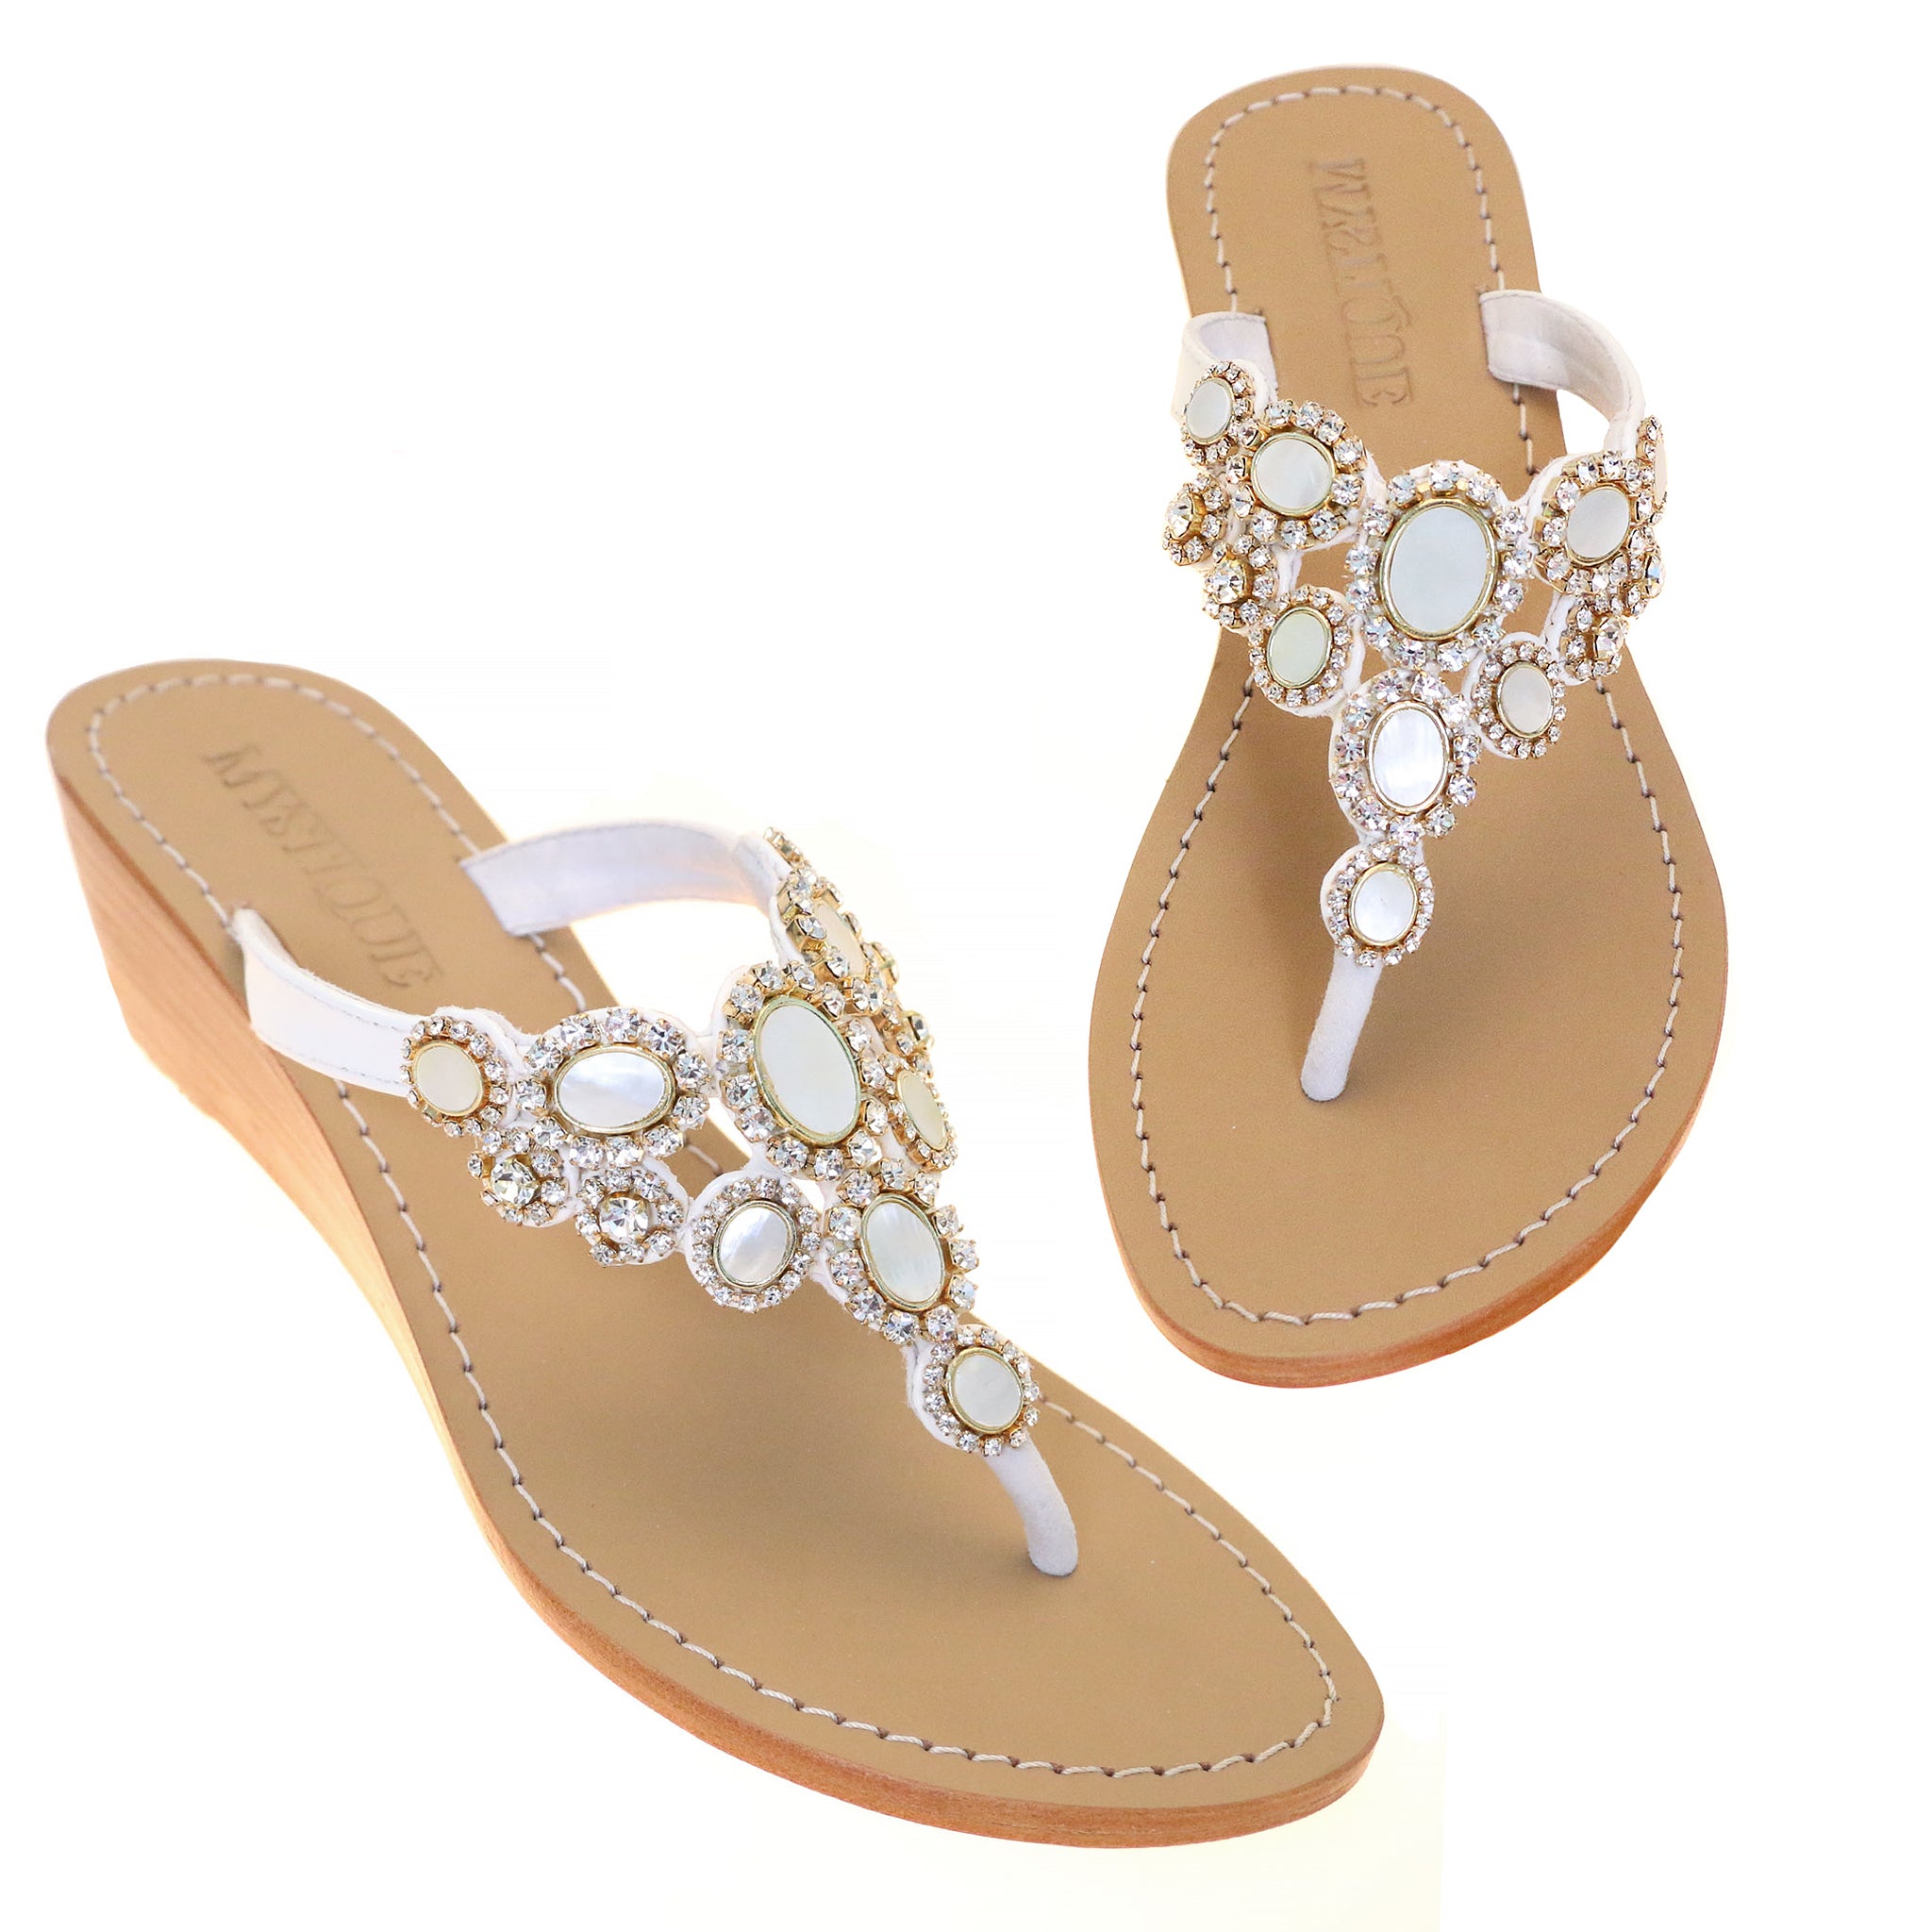 Ojai - Women's White Jeweled Wedge Sandals - Mystique Sandals